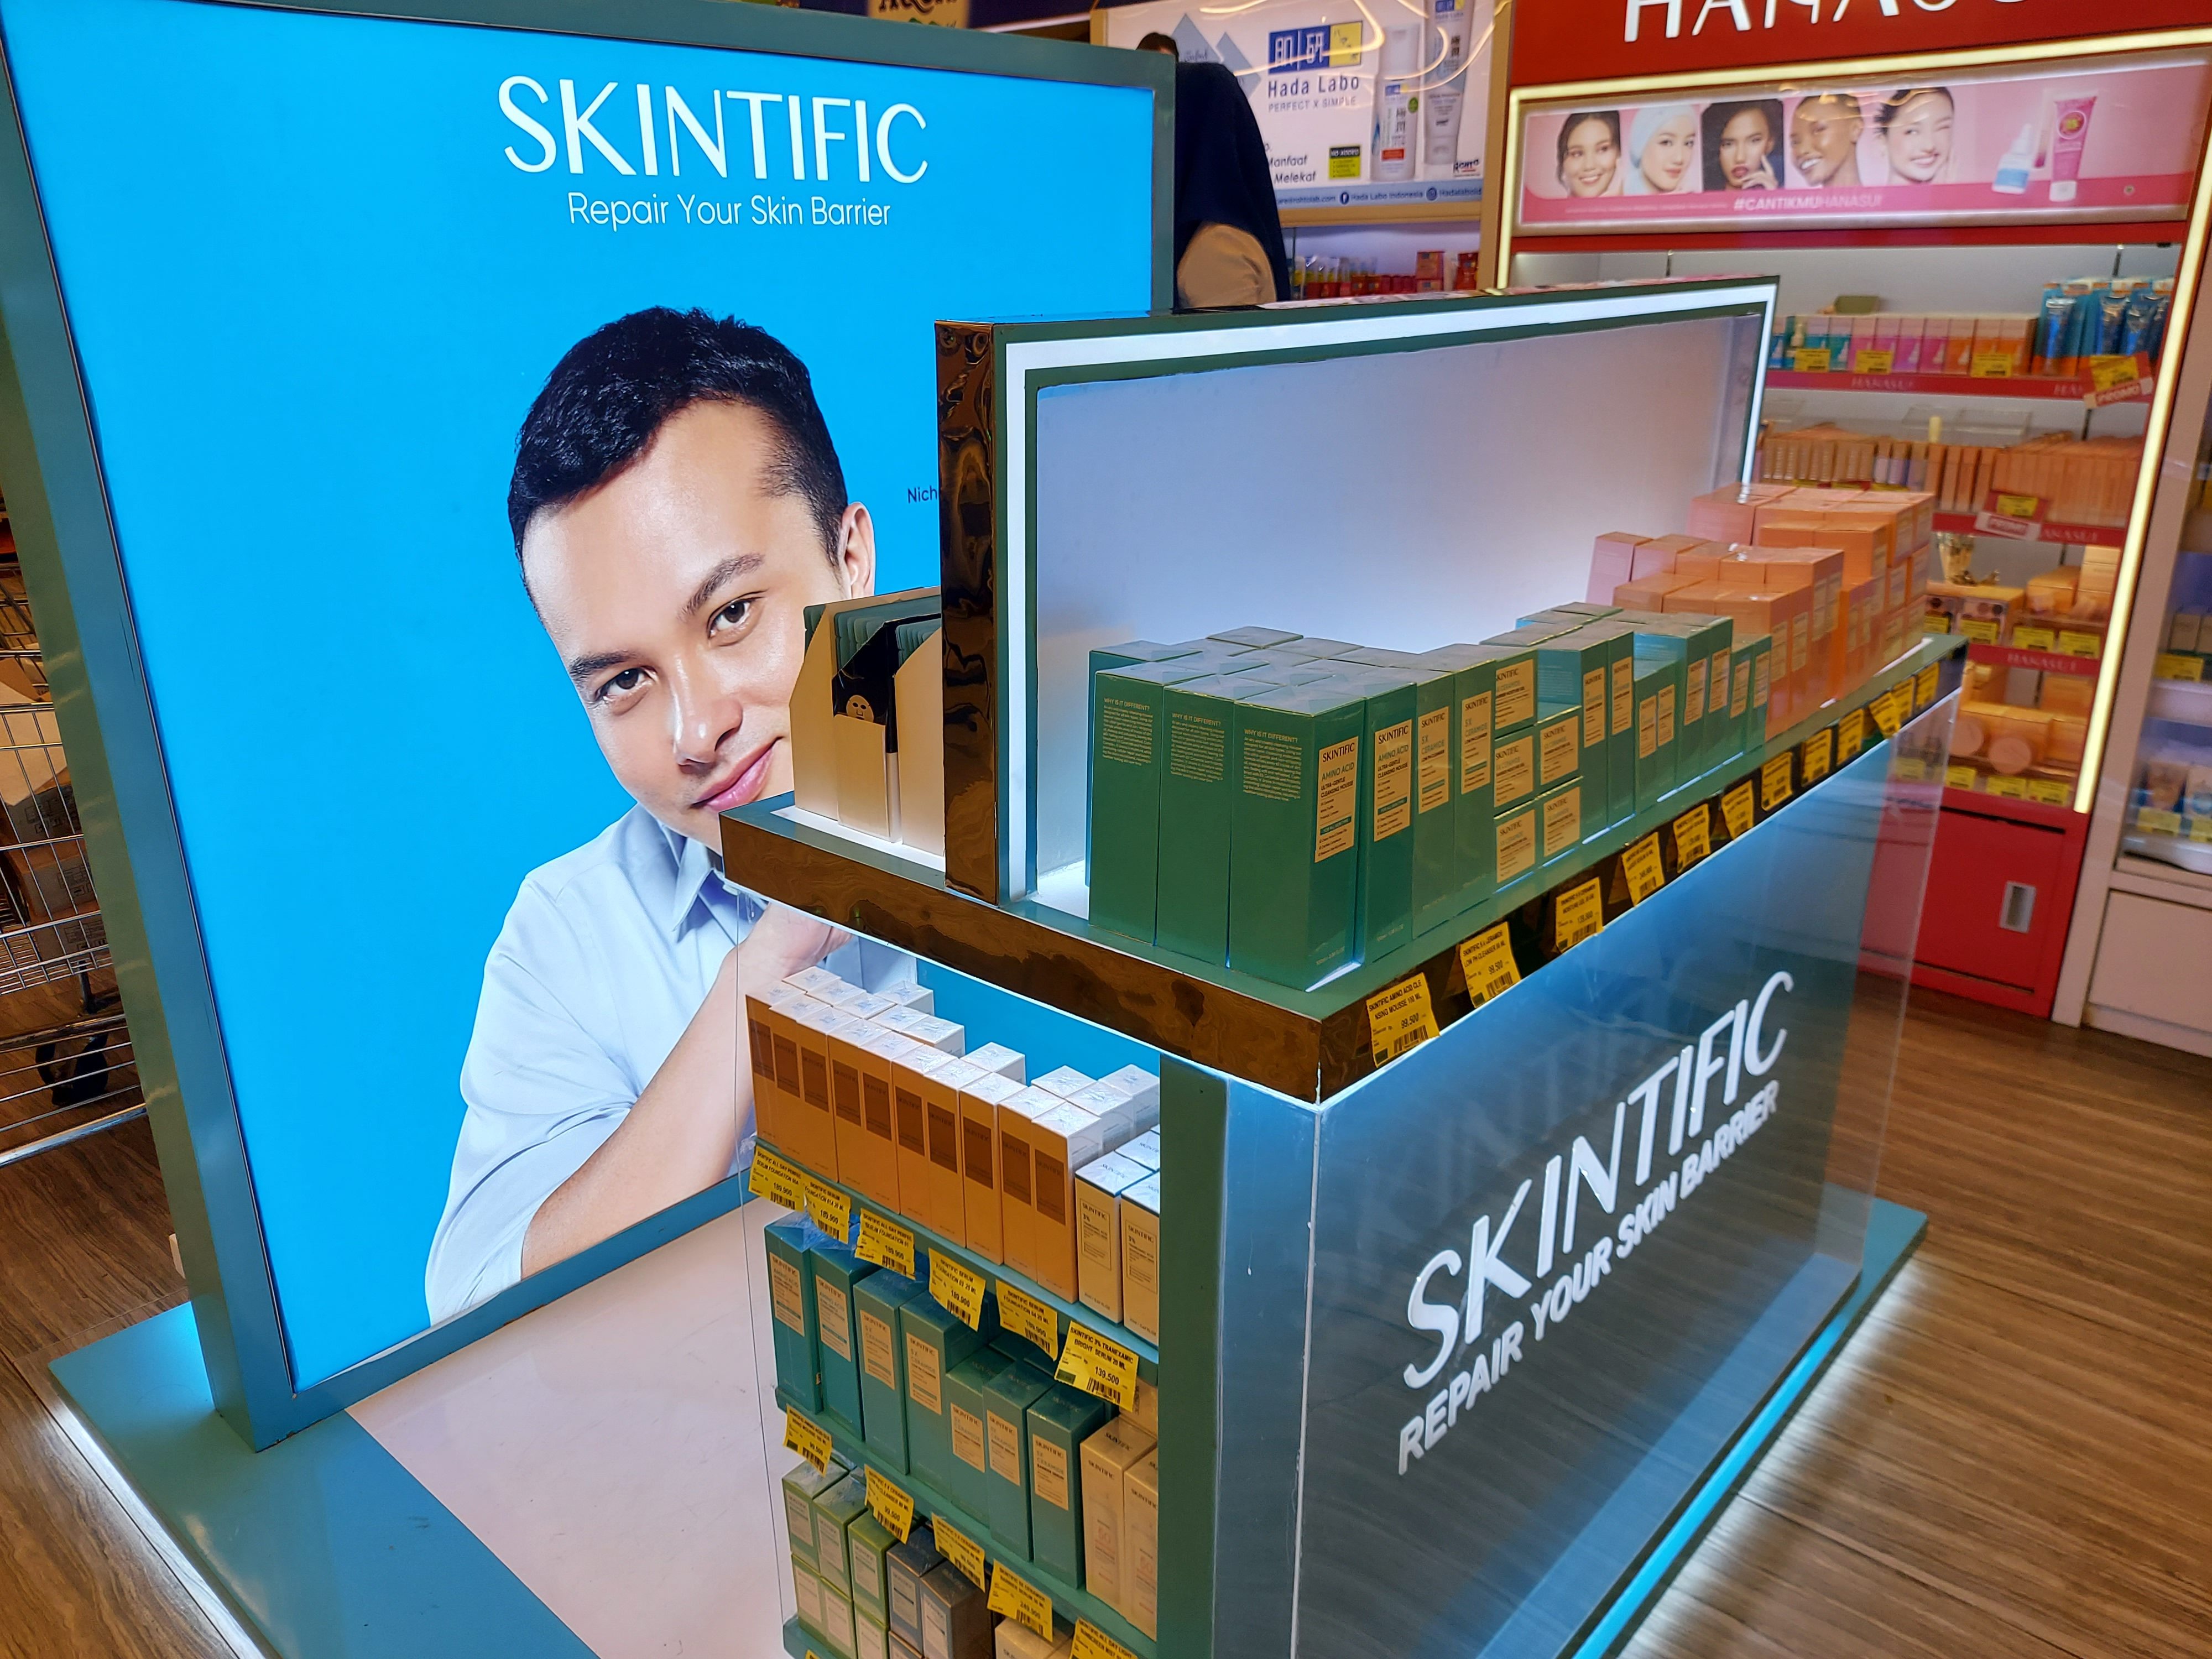 Skintific uses local brand ambassadors like actor Nicholas Saputra in Indonesia. Photo: Aisyah Llewellyn